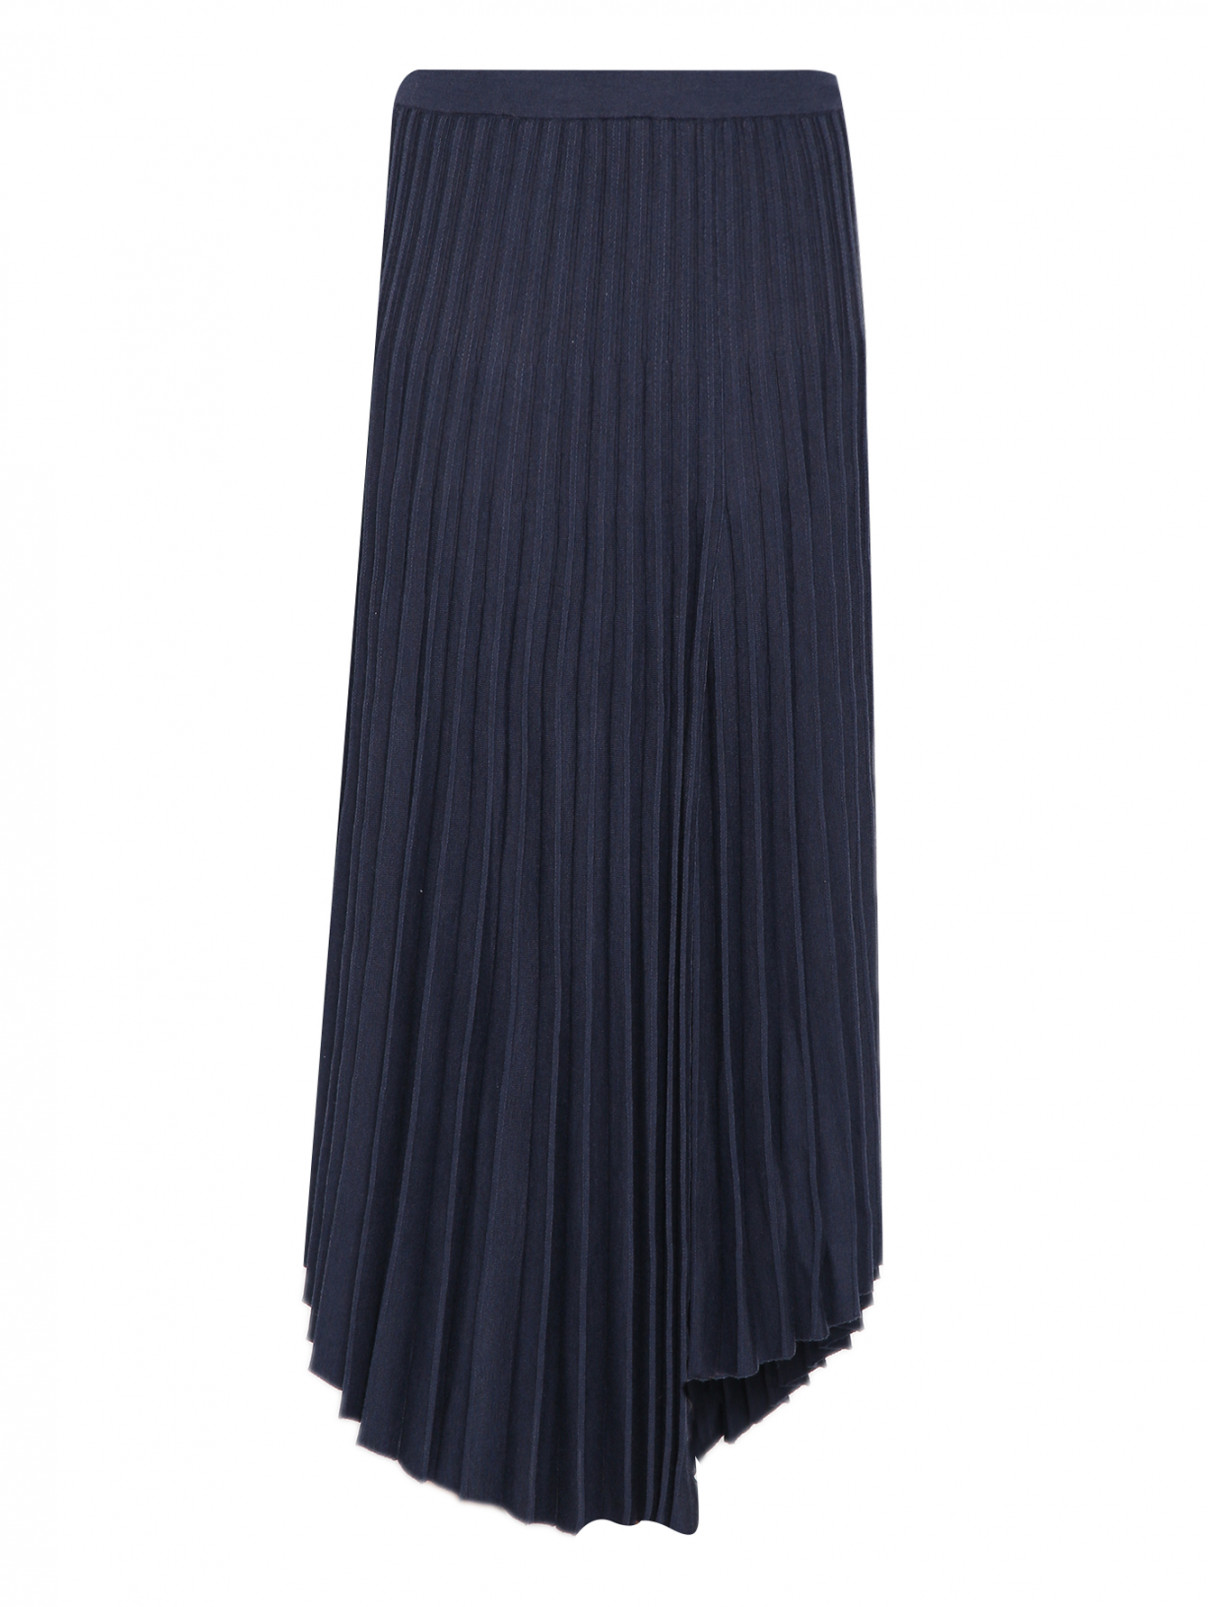 Трикотажная юбка-миди на резинке MRZ  –  Общий вид  – Цвет:  Синий